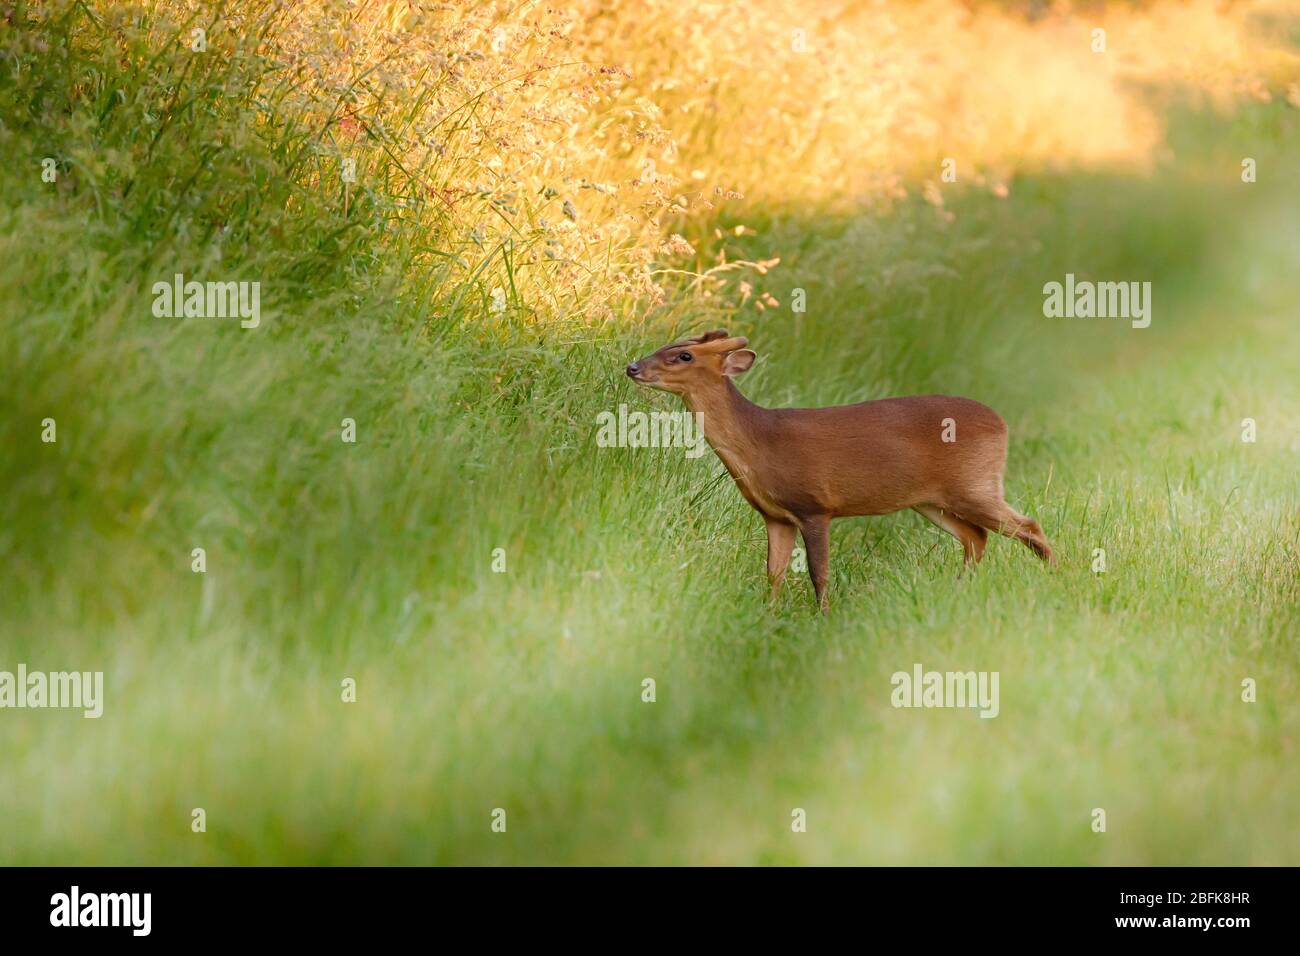 Le cerf muntjac sauvage traverse une piste d'herbe. Animal sauvage à Norfolk, Royaume-Uni Banque D'Images